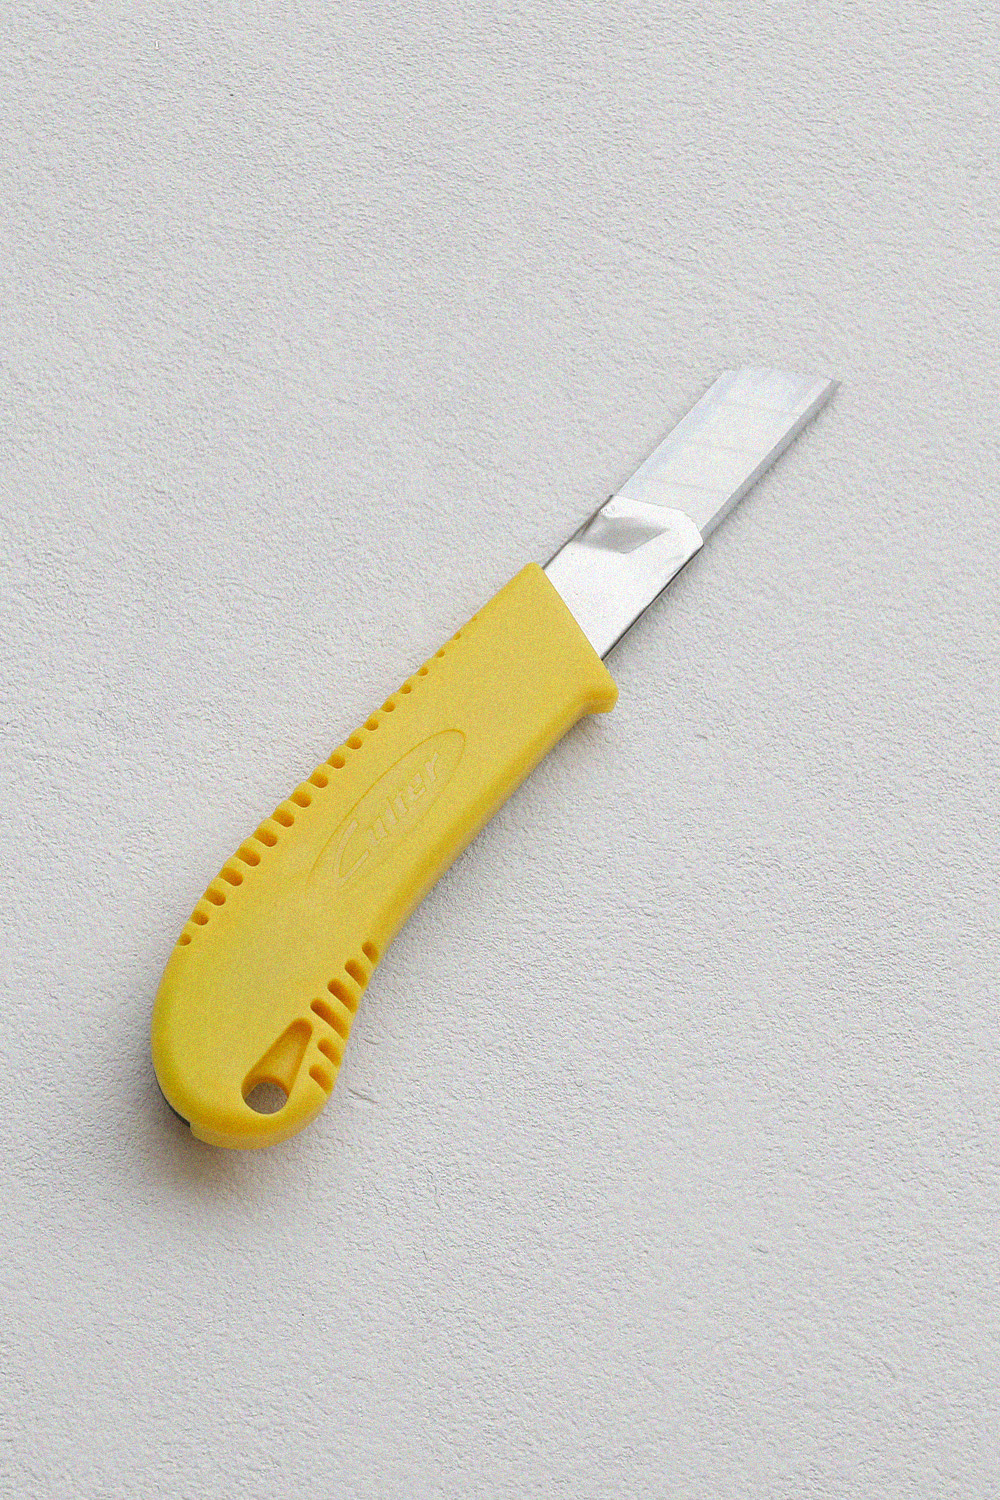 RARERAW CUTTER KNIFE